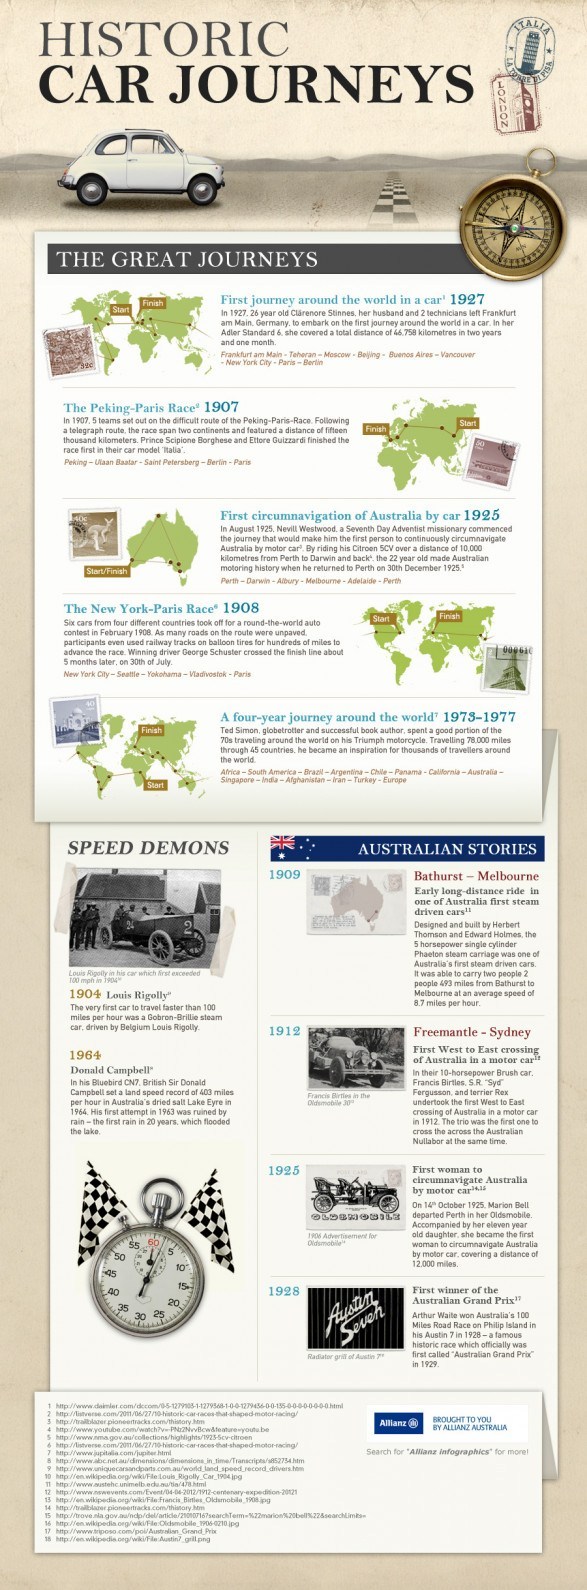 Historic car journeys